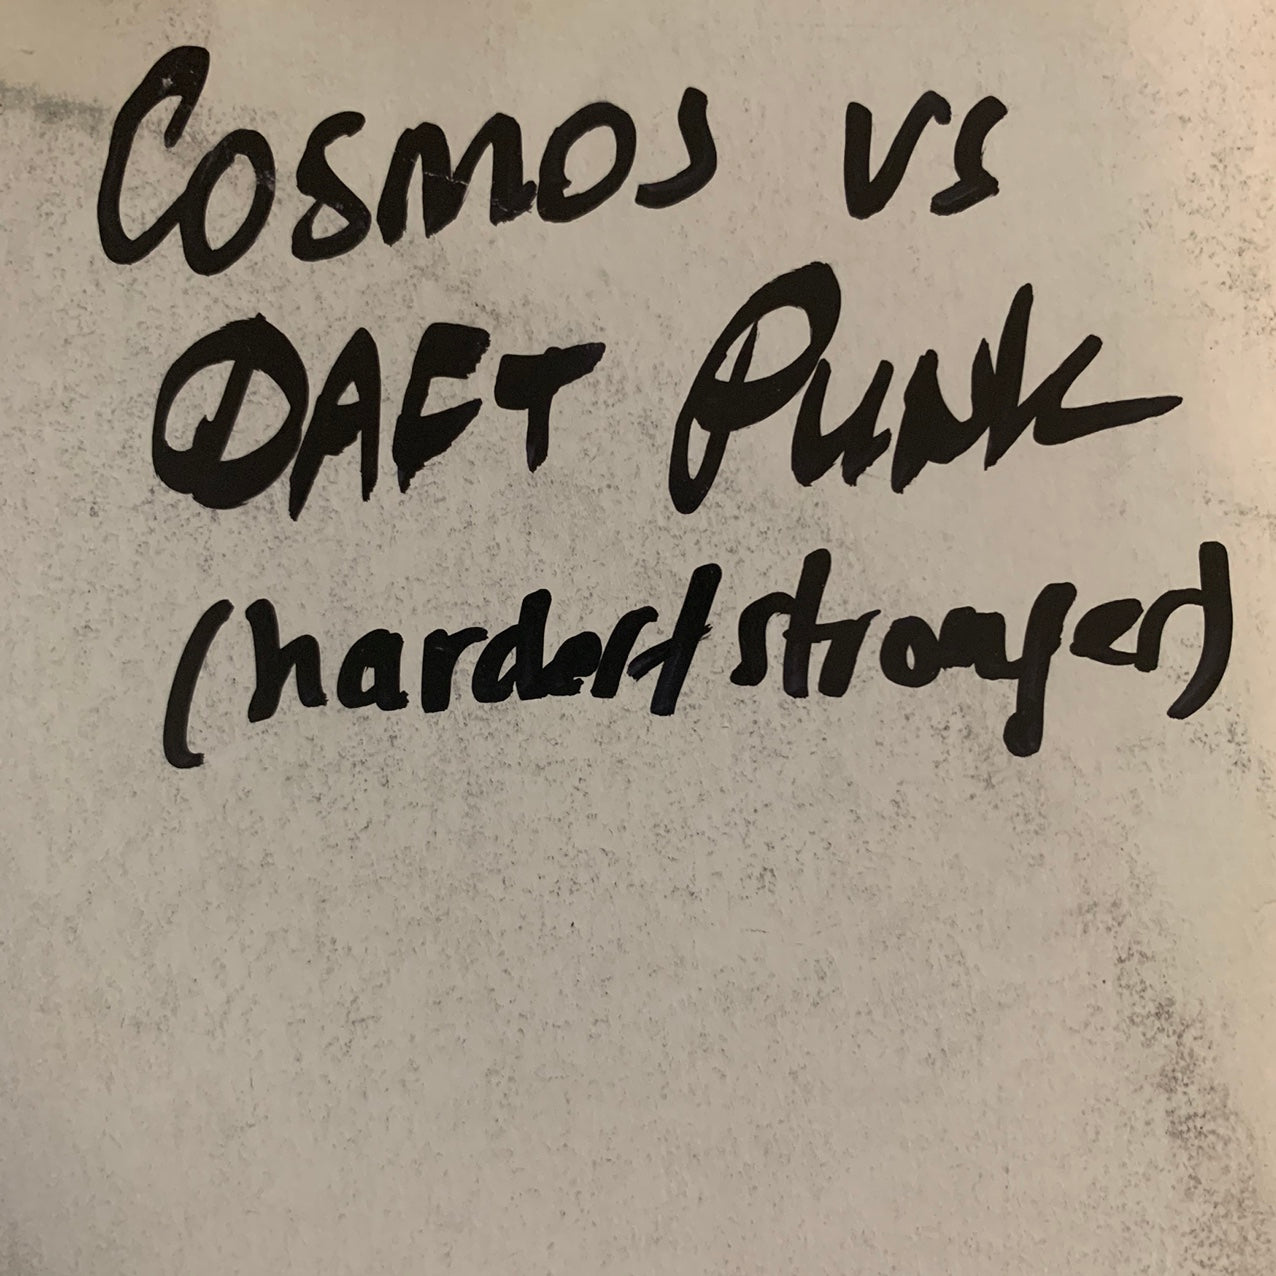 Daft Punk V’s Cosmos “Harder Faster” House Music White Label Mash Up 1 Track 12inch Vinyl